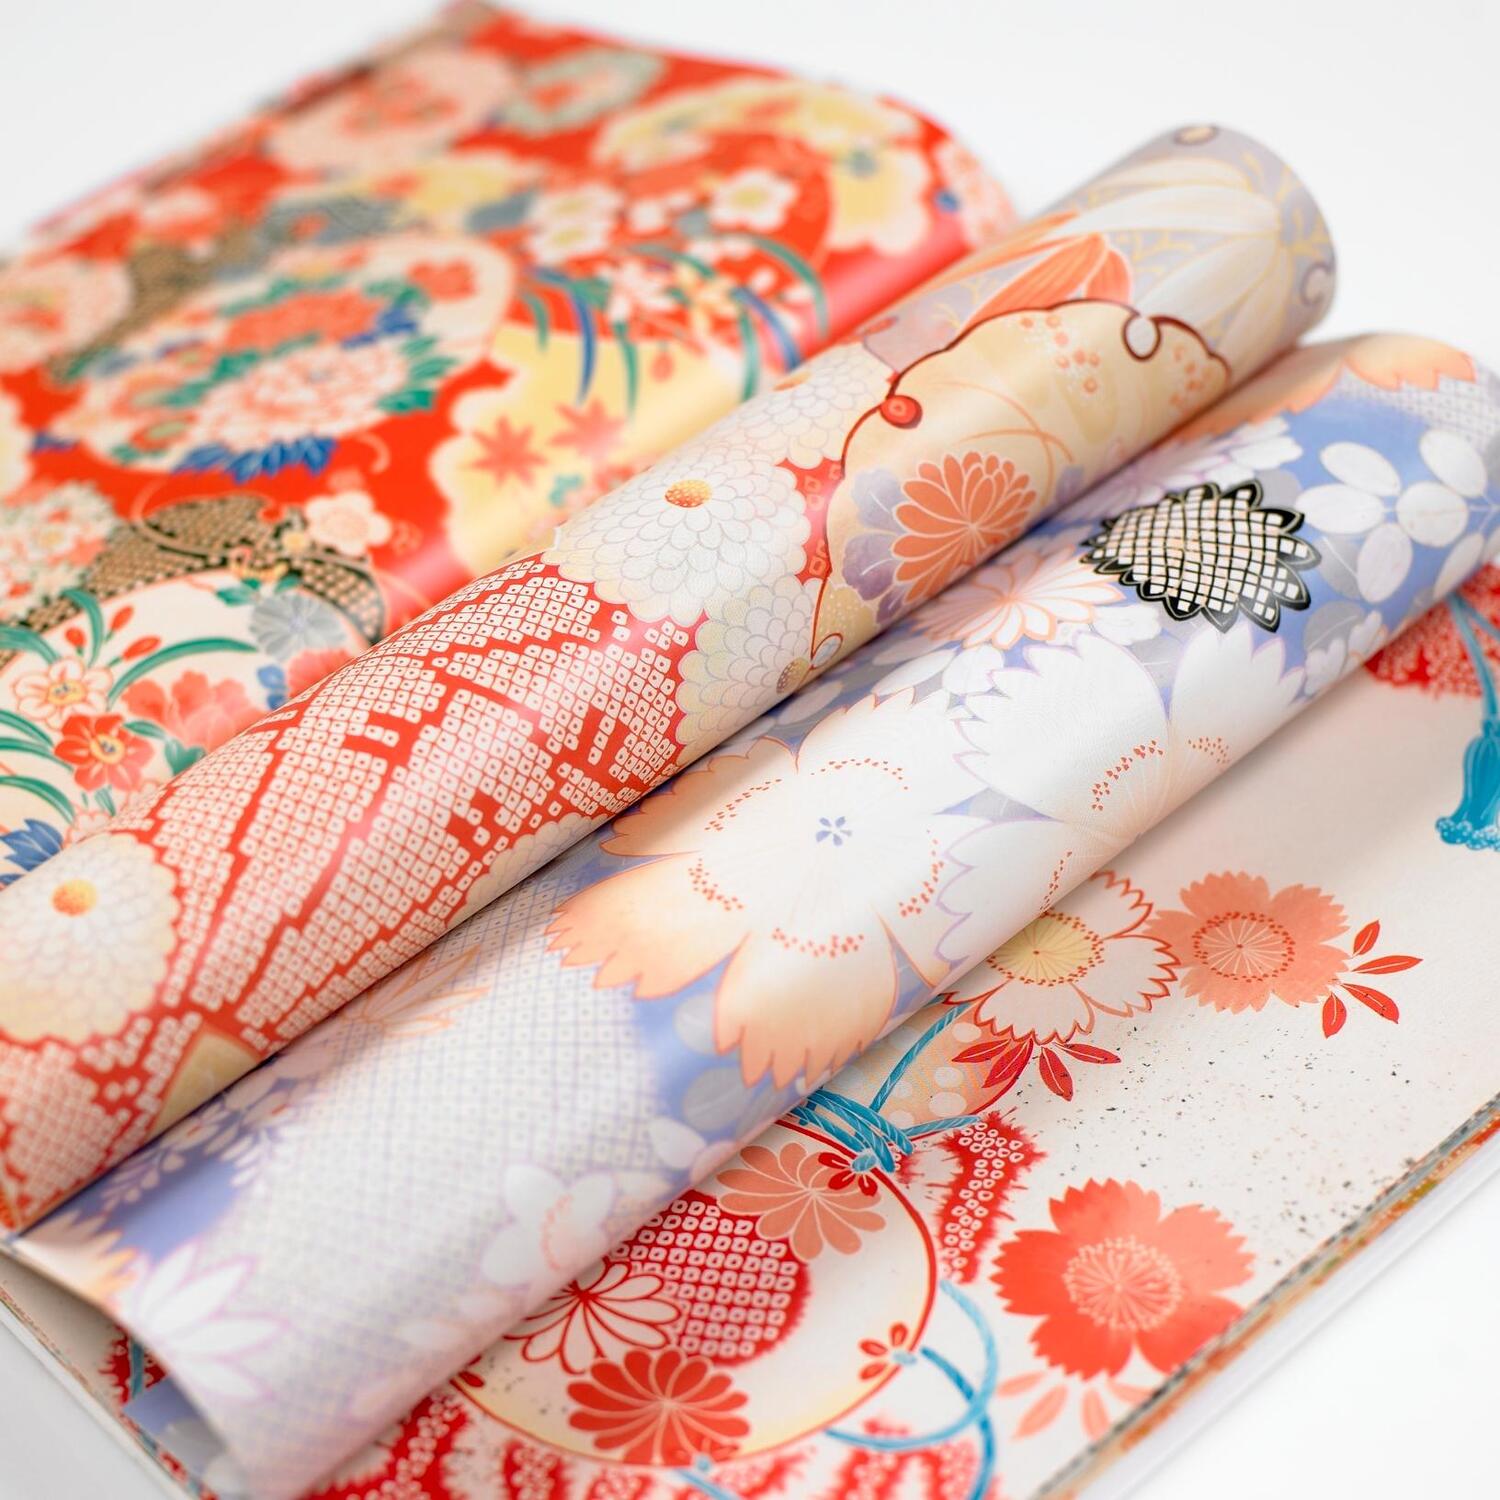 Bild: 9789460091100 | Kimono | Gift &amp; Creative Paper Book Vol. 97 | Pepin Van Roojen | Buch